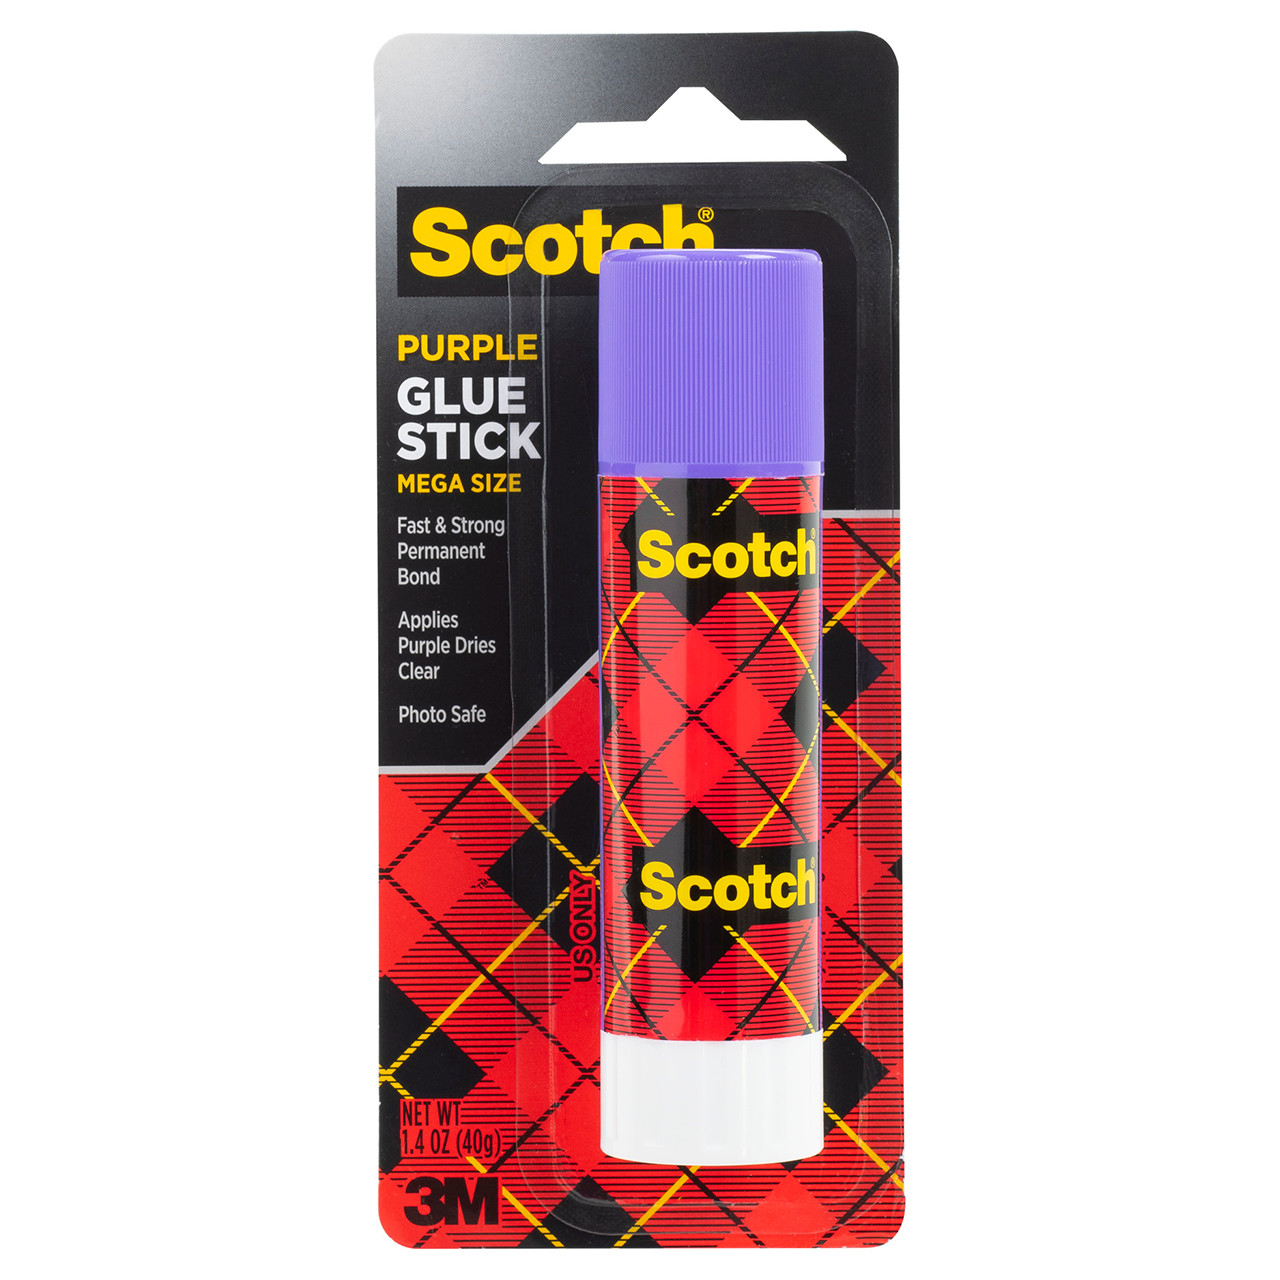 Scotch Mega Glue Stick 1.4oz